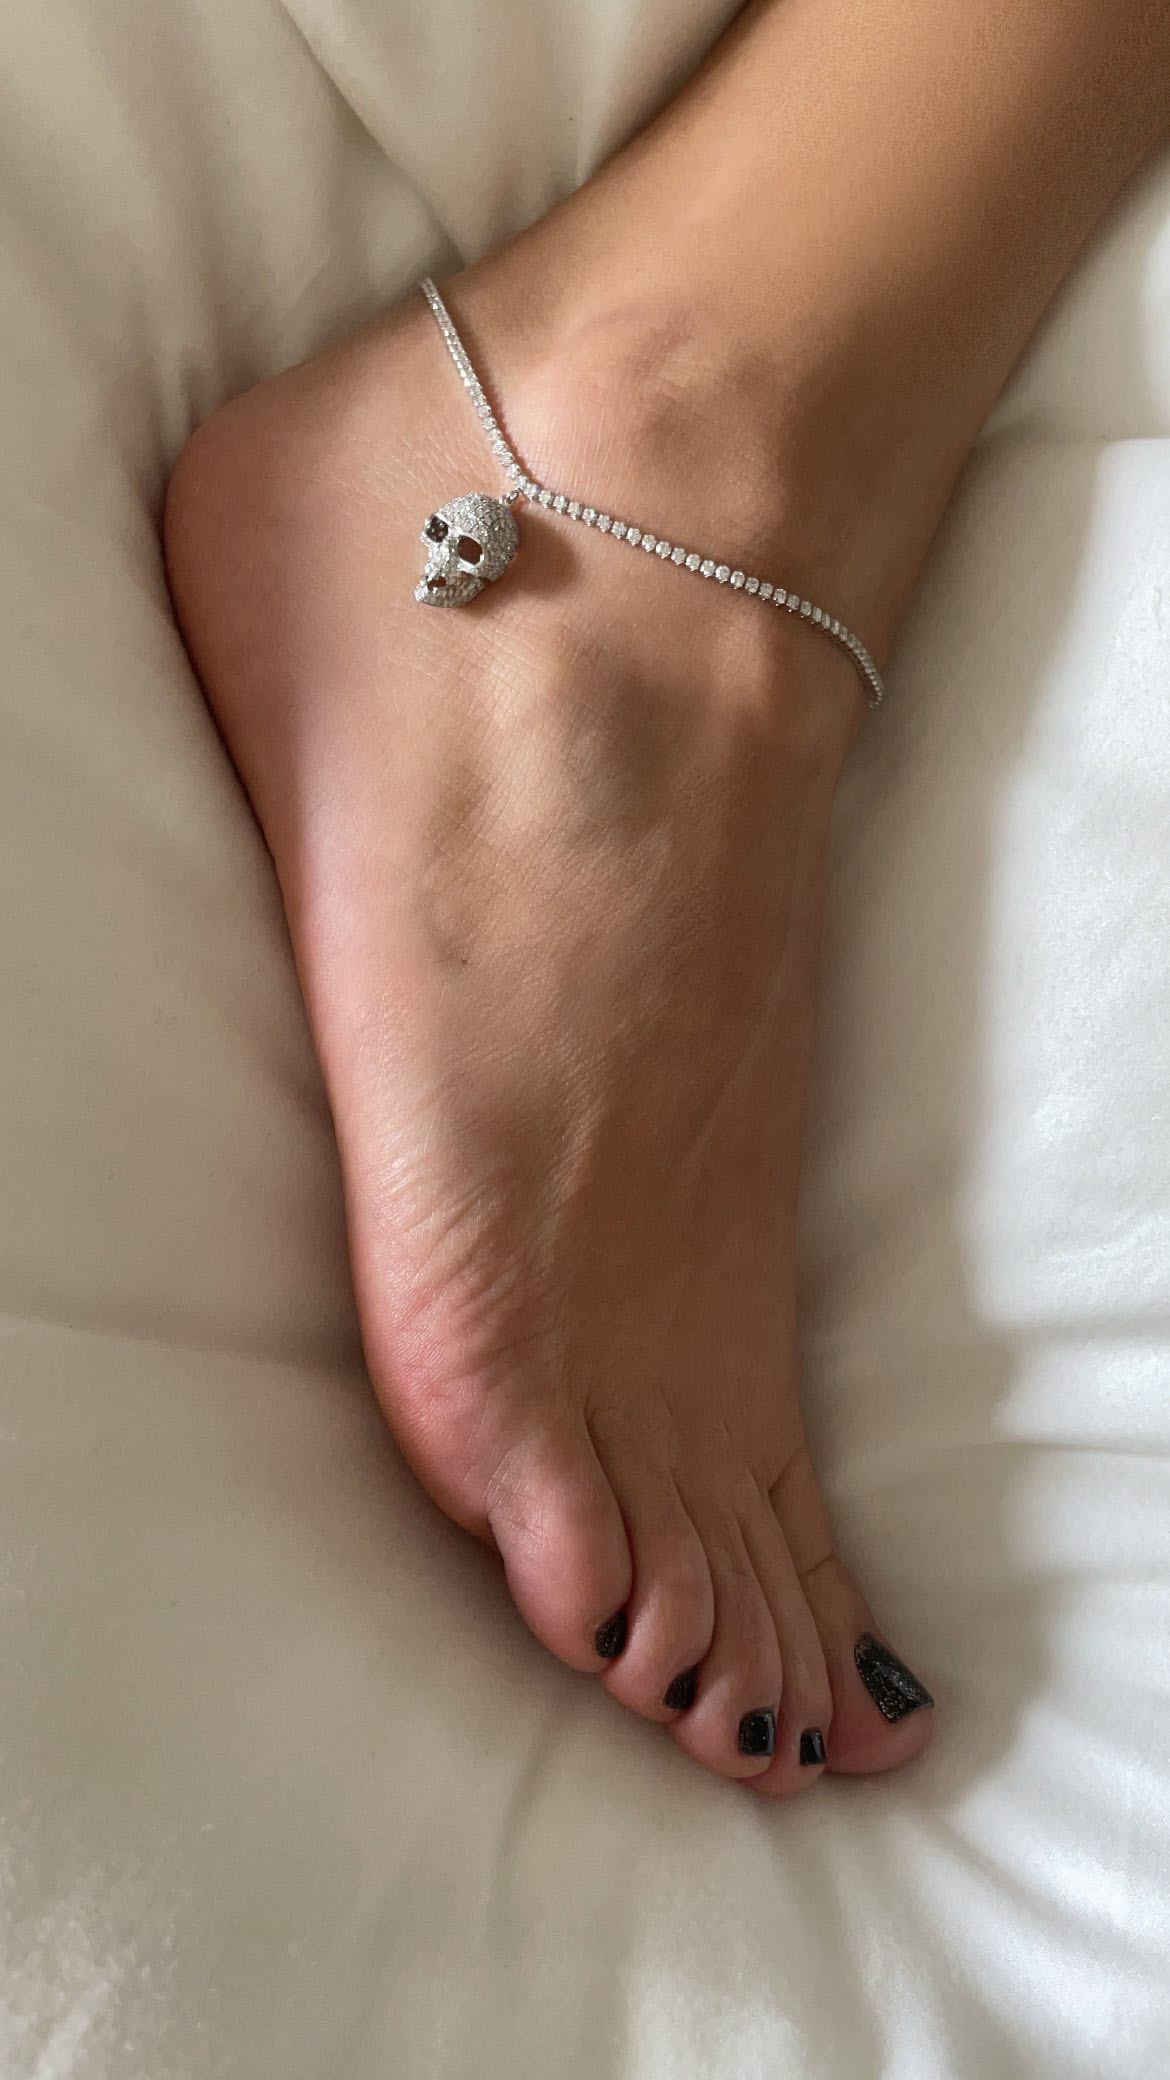 Kourtney Kardashian's foot